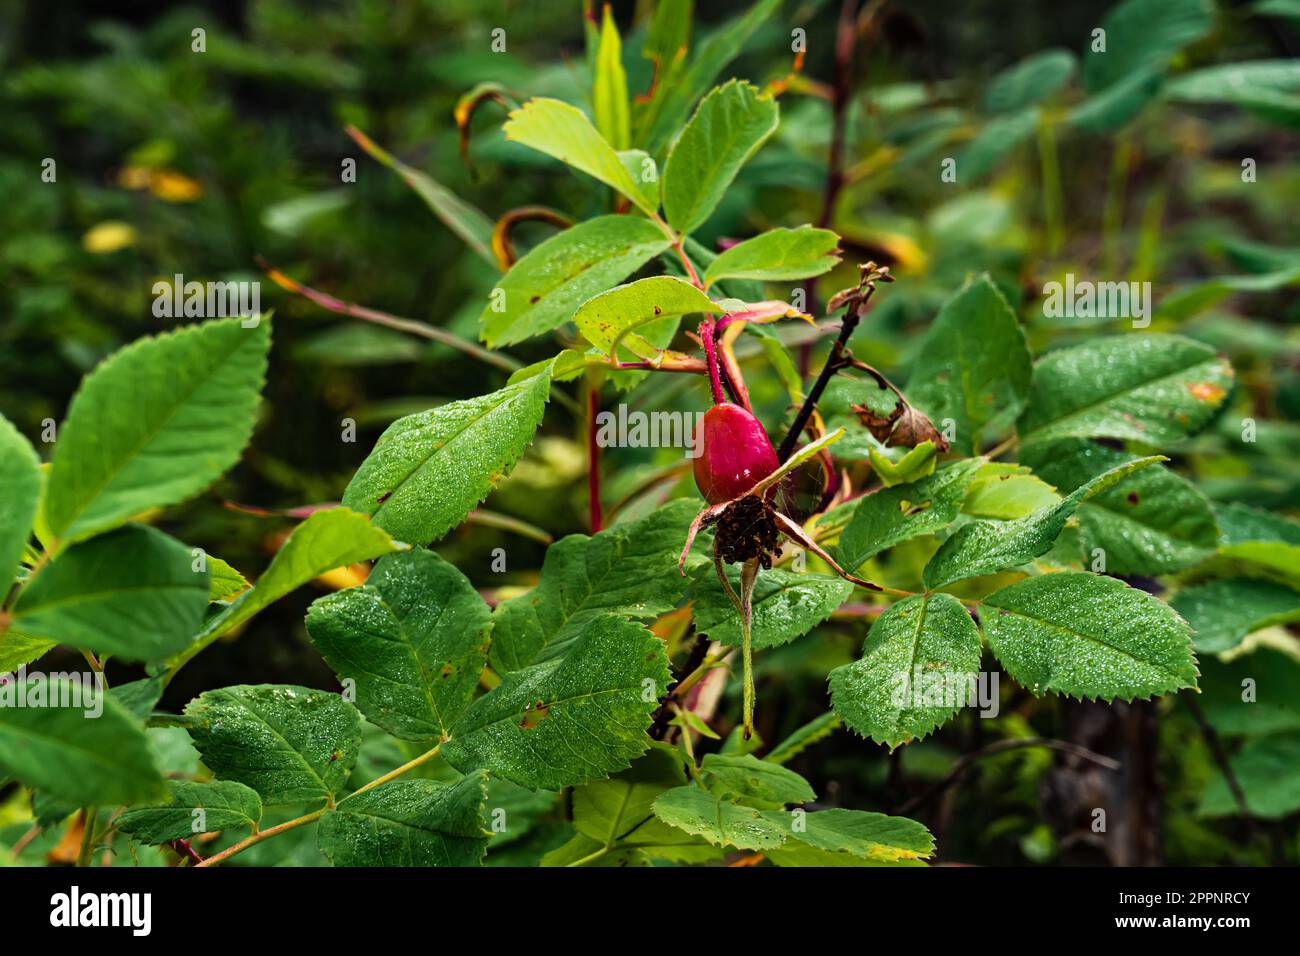 red fruit of Rosa majalis cinnamon rose plant among green leaves Stock Photo